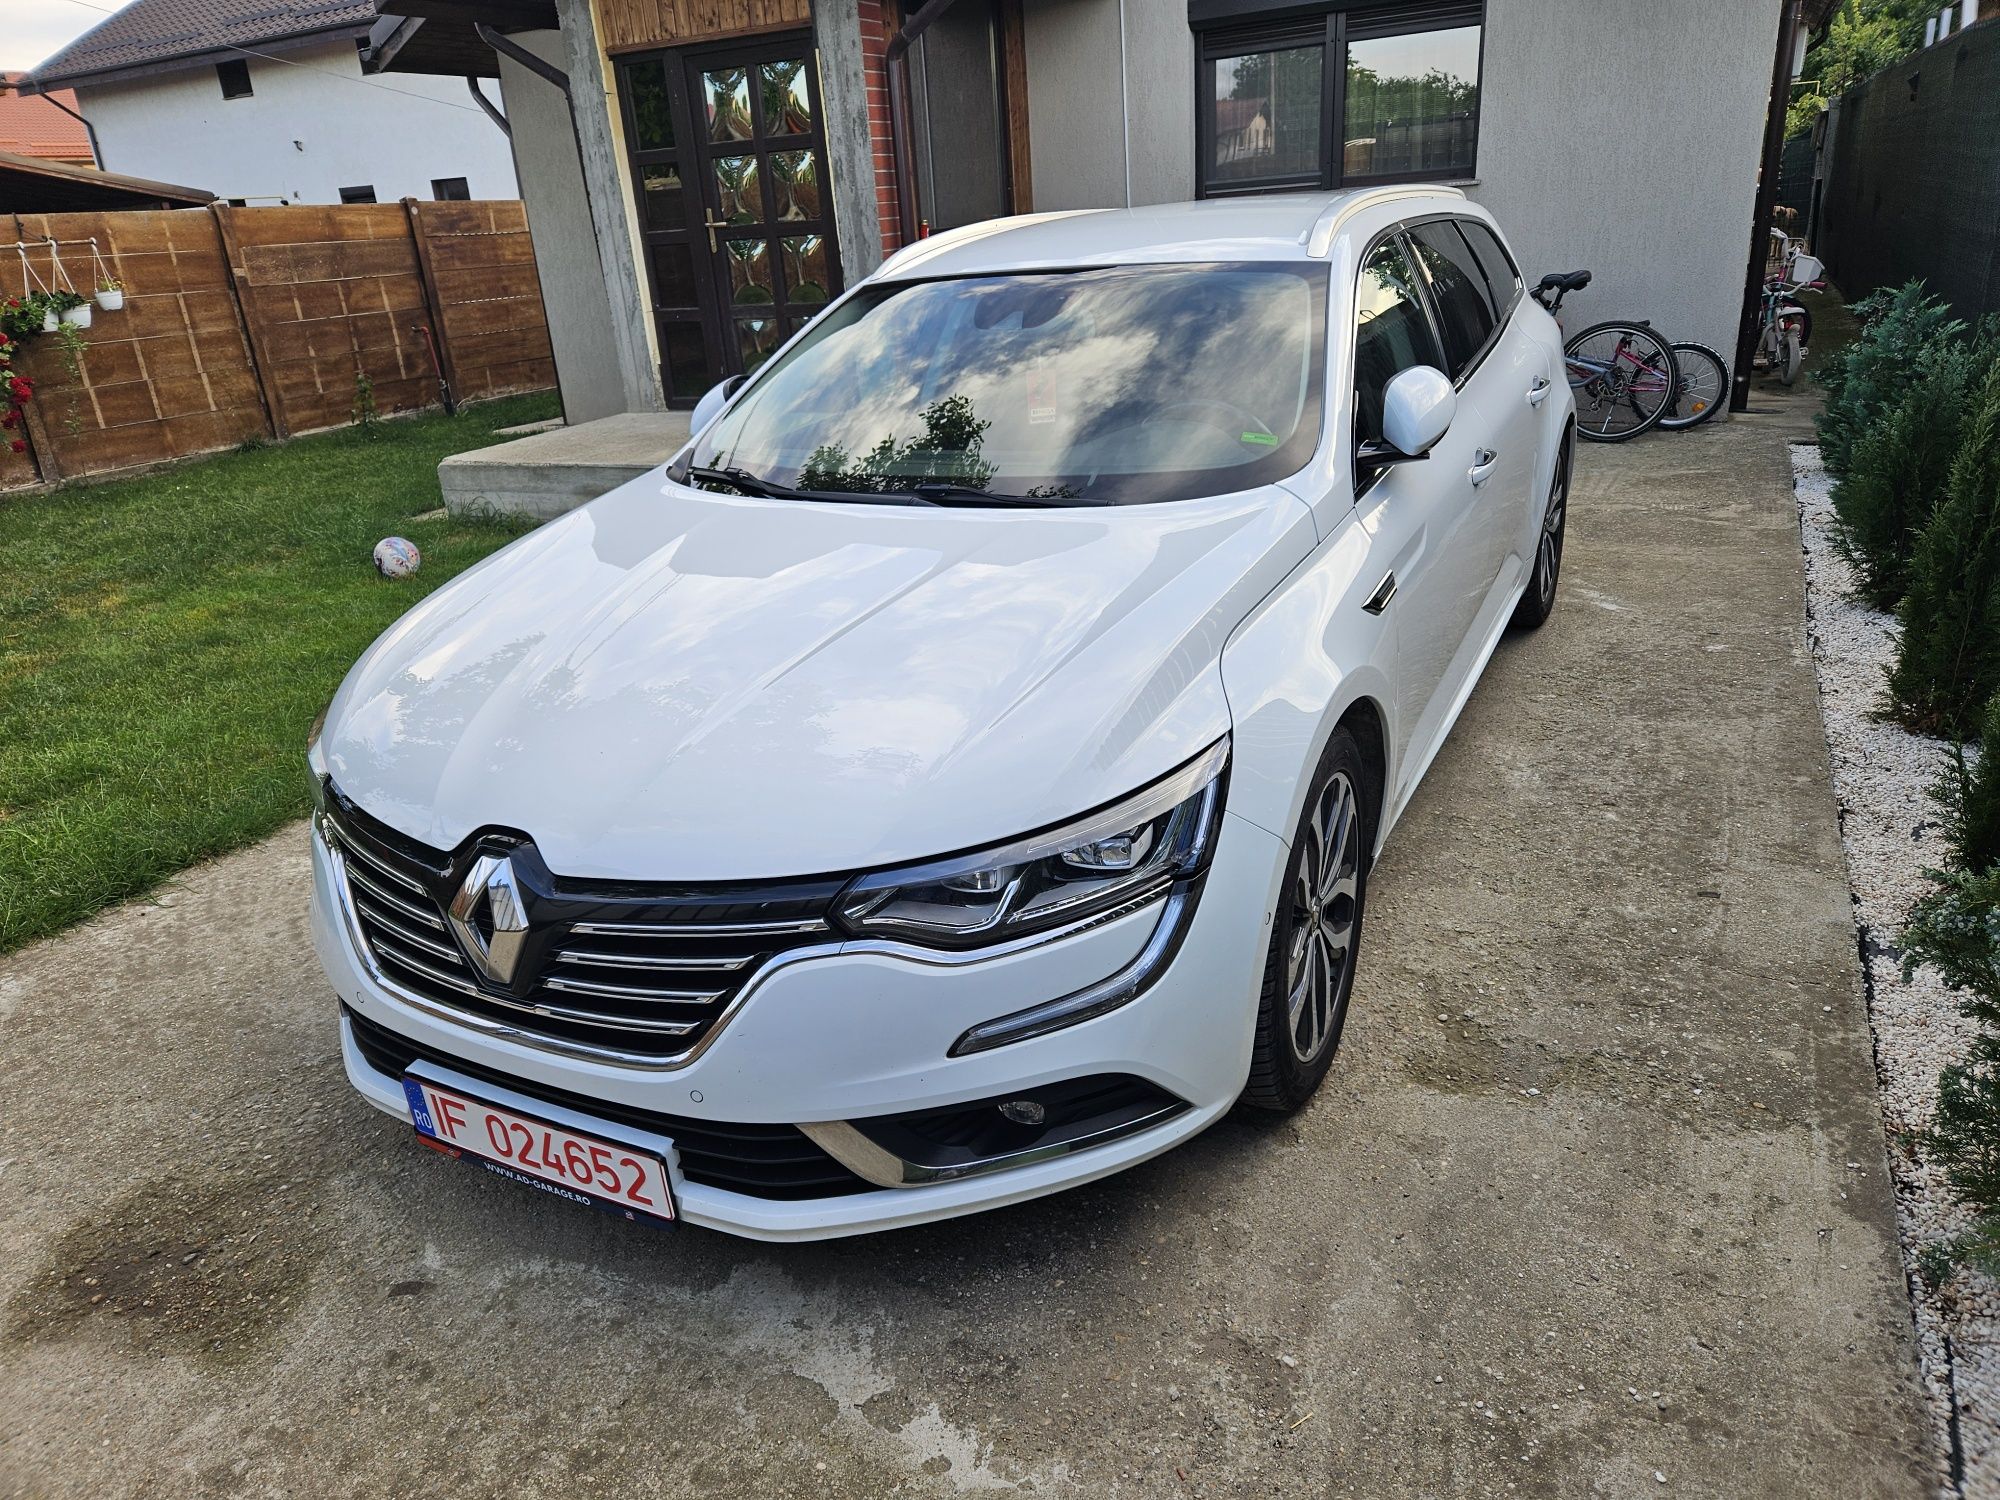 Renault talisman 2019. 4 control